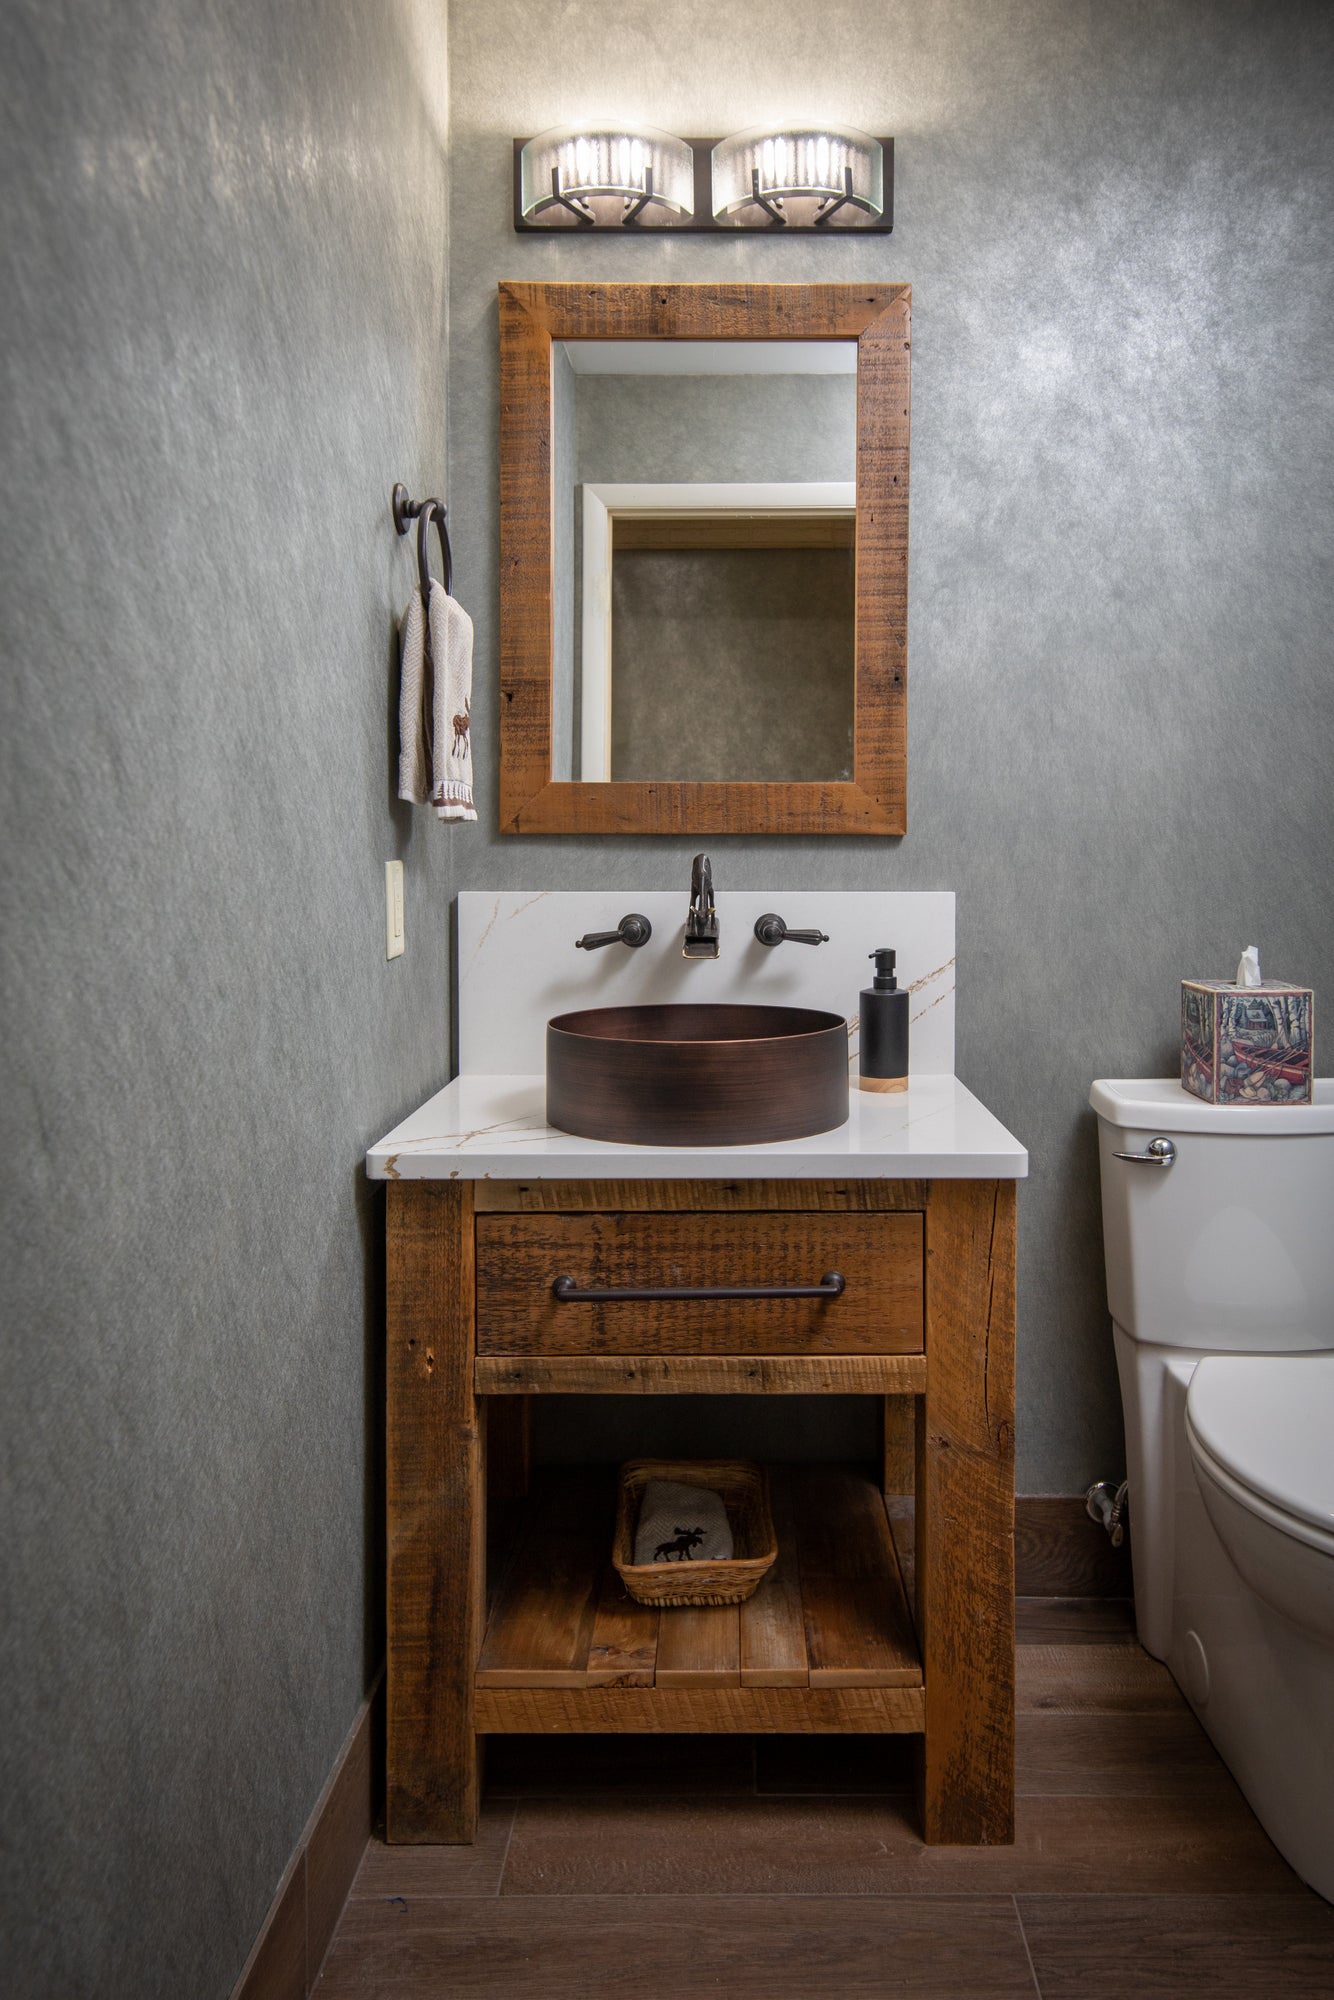 15" Round Stainless Steel Bathroom Vessel Sink with Drain in Bronze